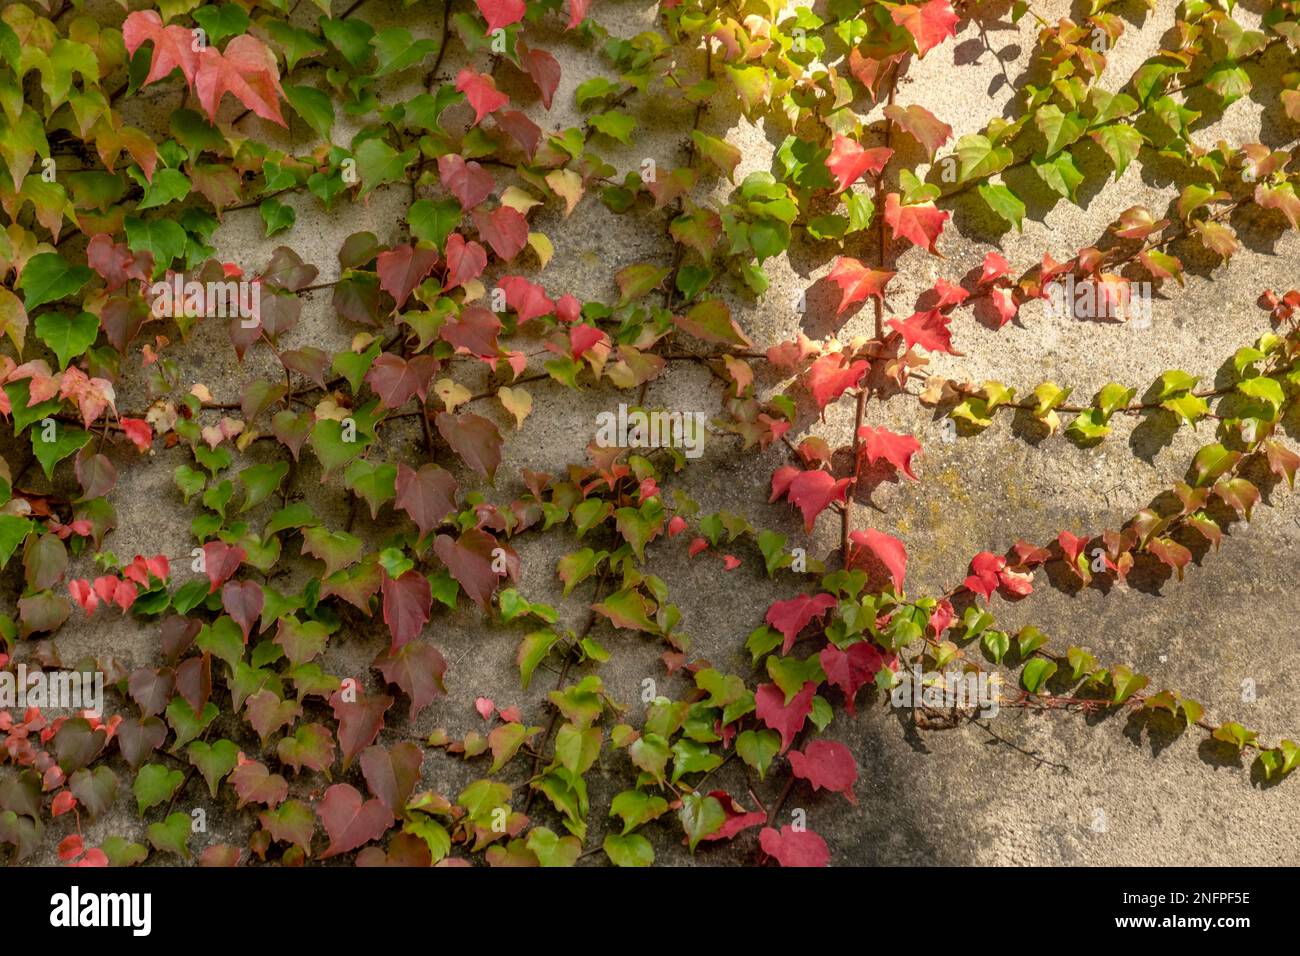 Discolouring leaves of wild vine (Vitis vinifera subsp. sylvestris) Stock Photo